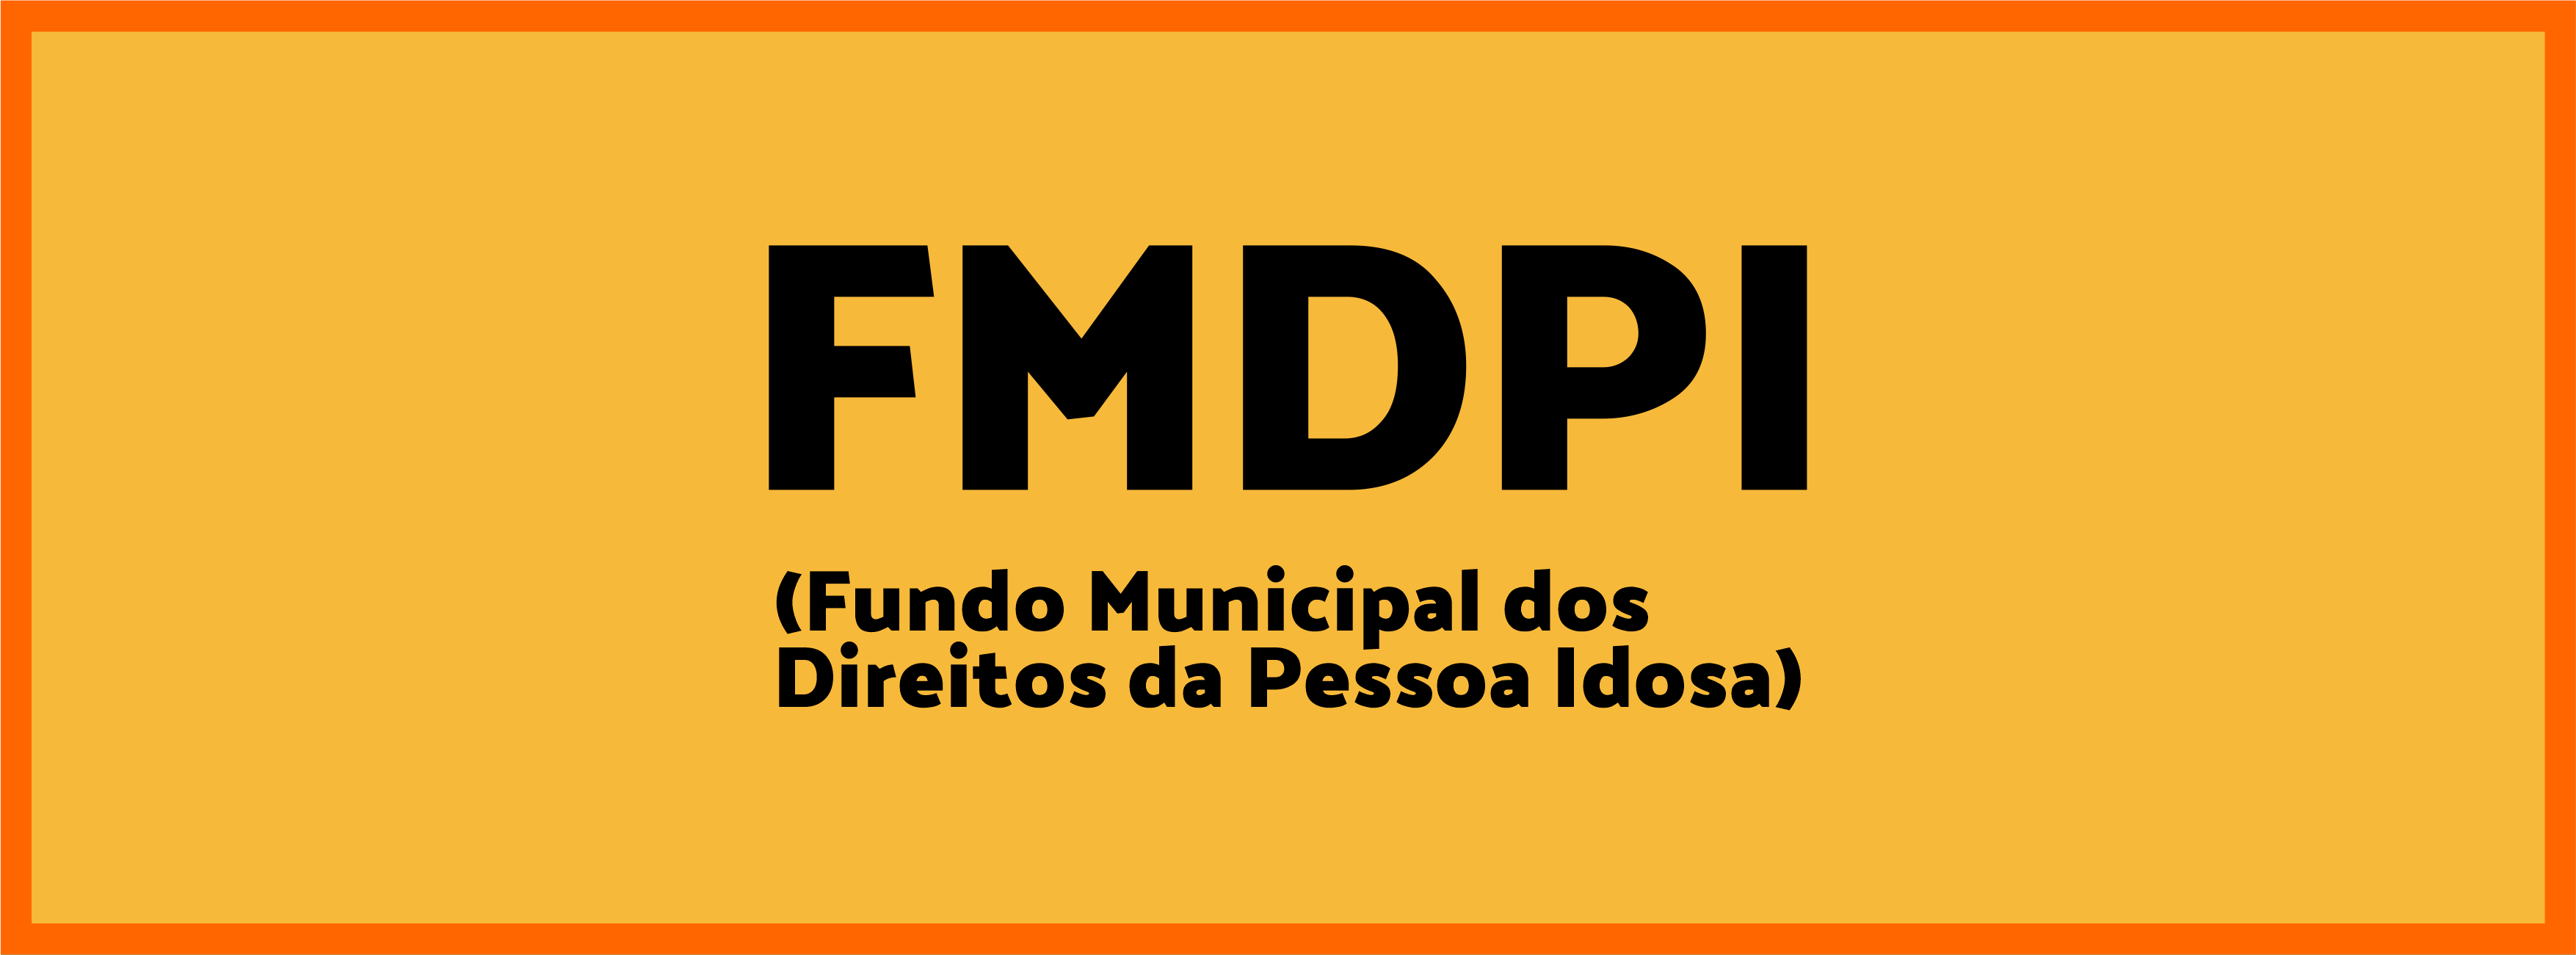 FMDPI